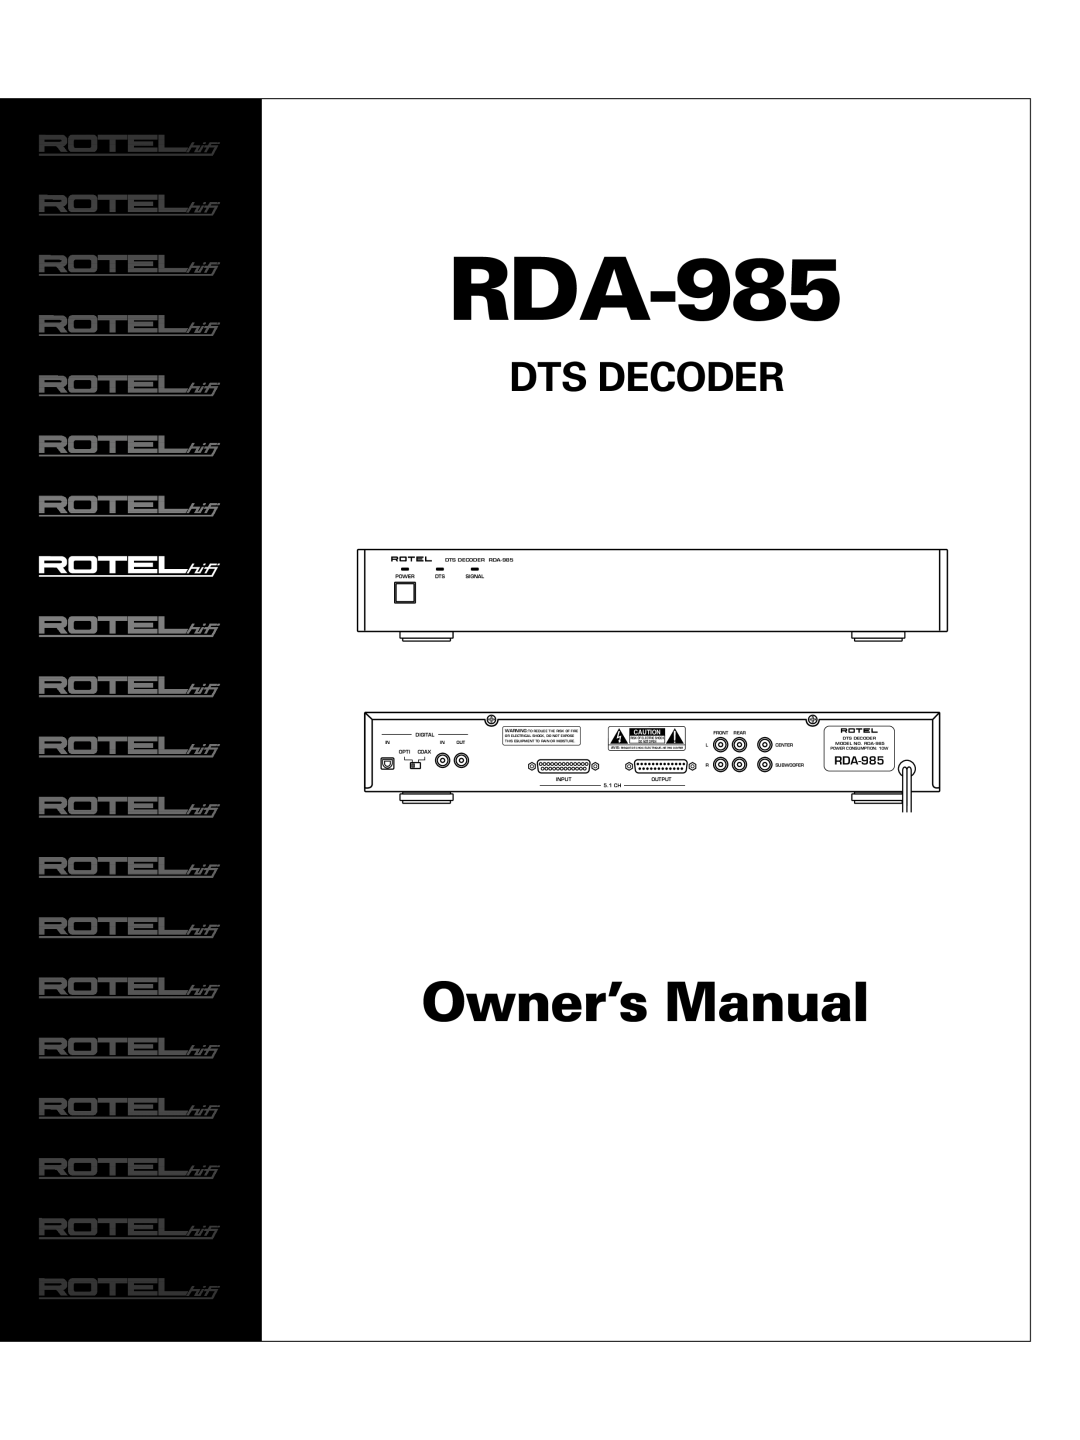 Rotel RDA-985 owner manual Owner’s Manual, Dts Decoder 